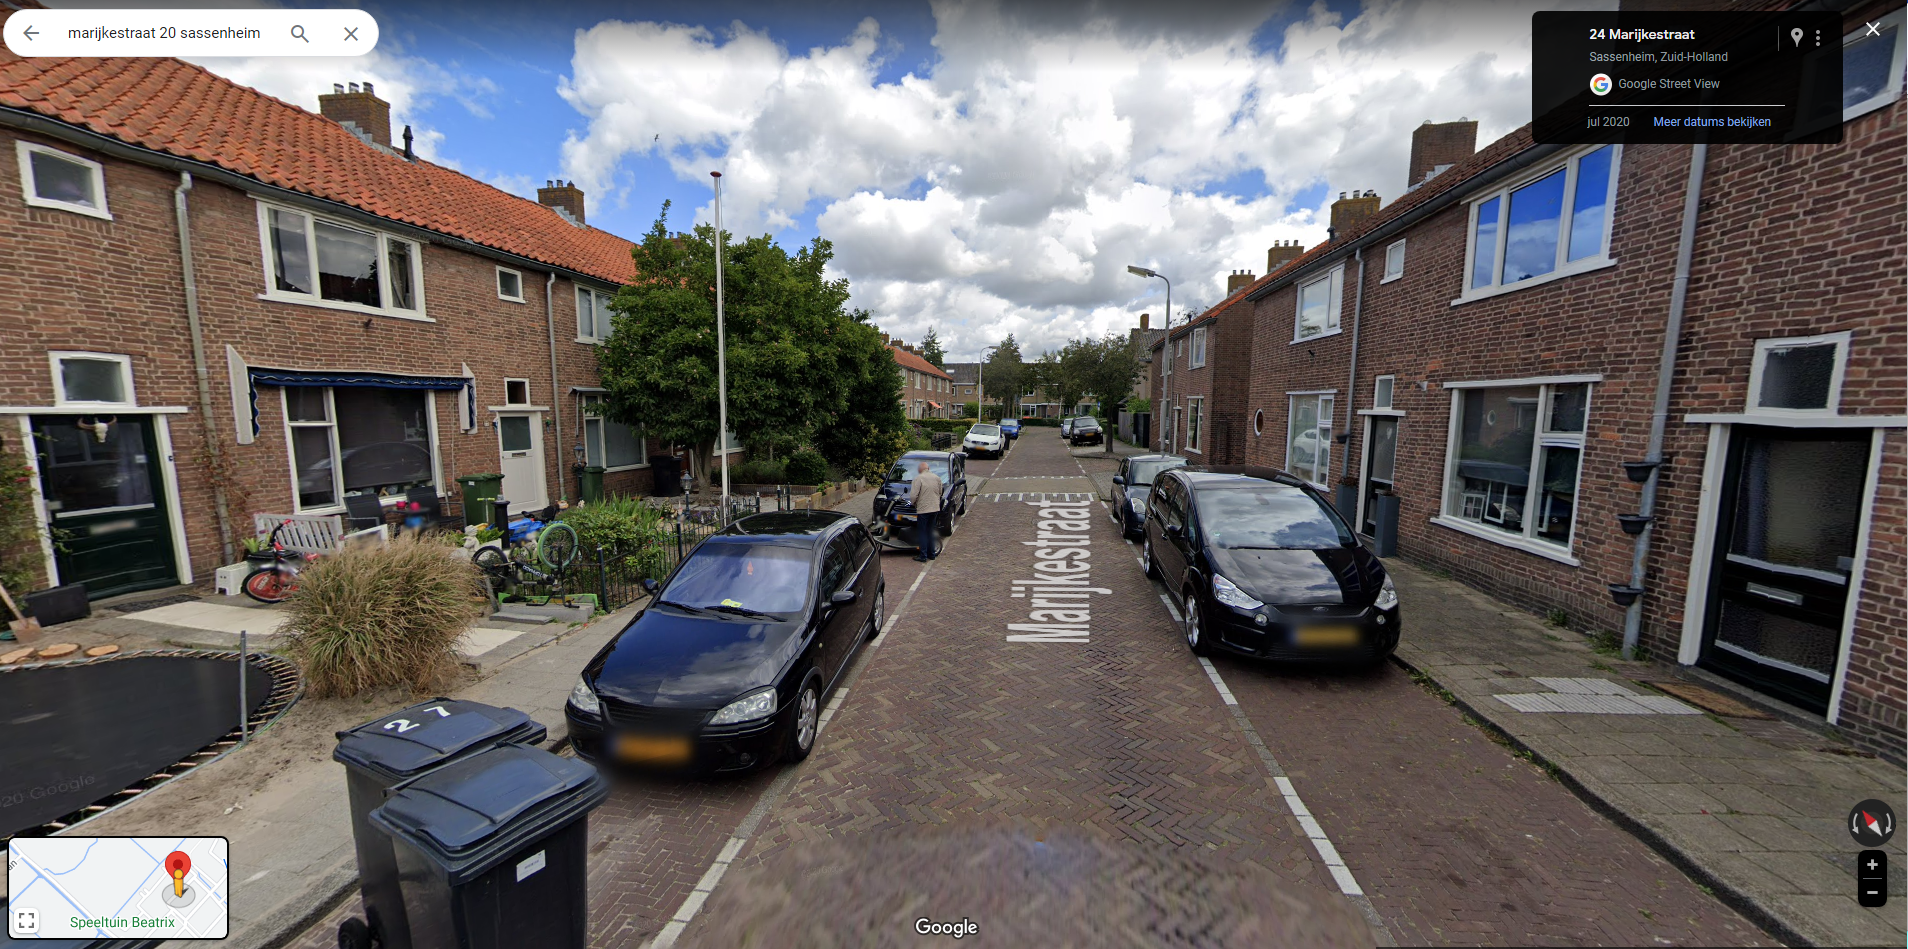 Marijkestraat 20, 2171 XD Sassenheim, Nederland